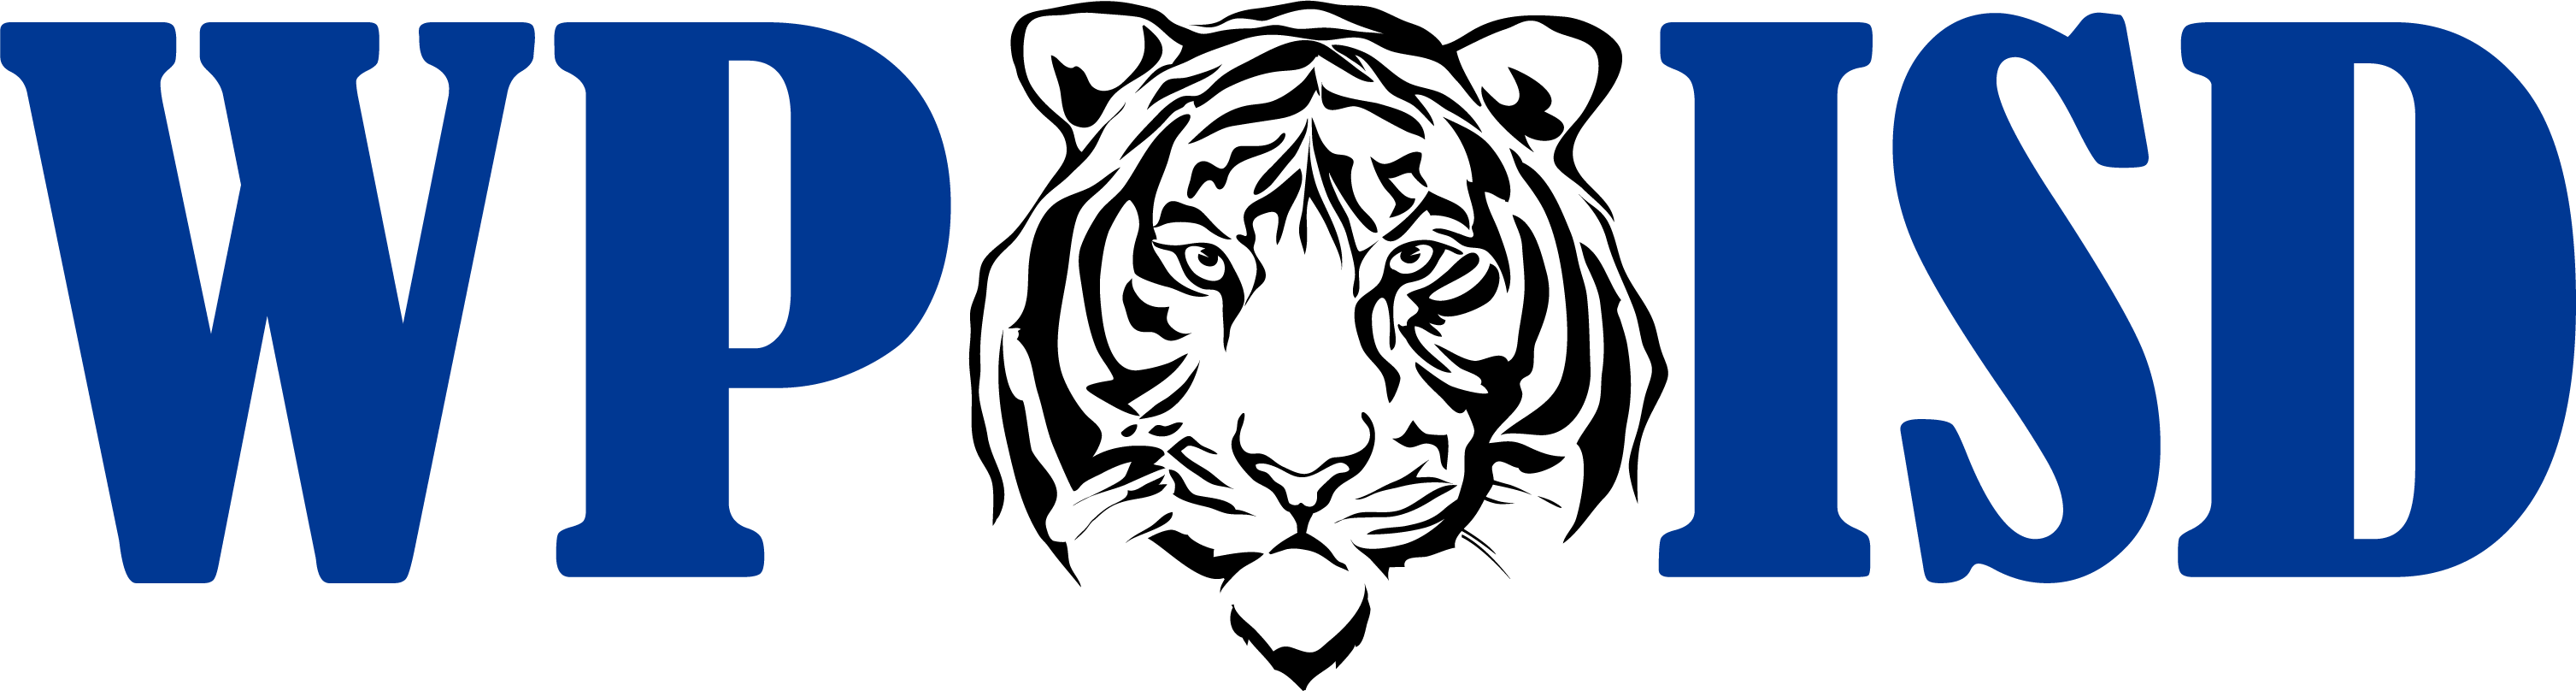 Wills Point ISD's Logo